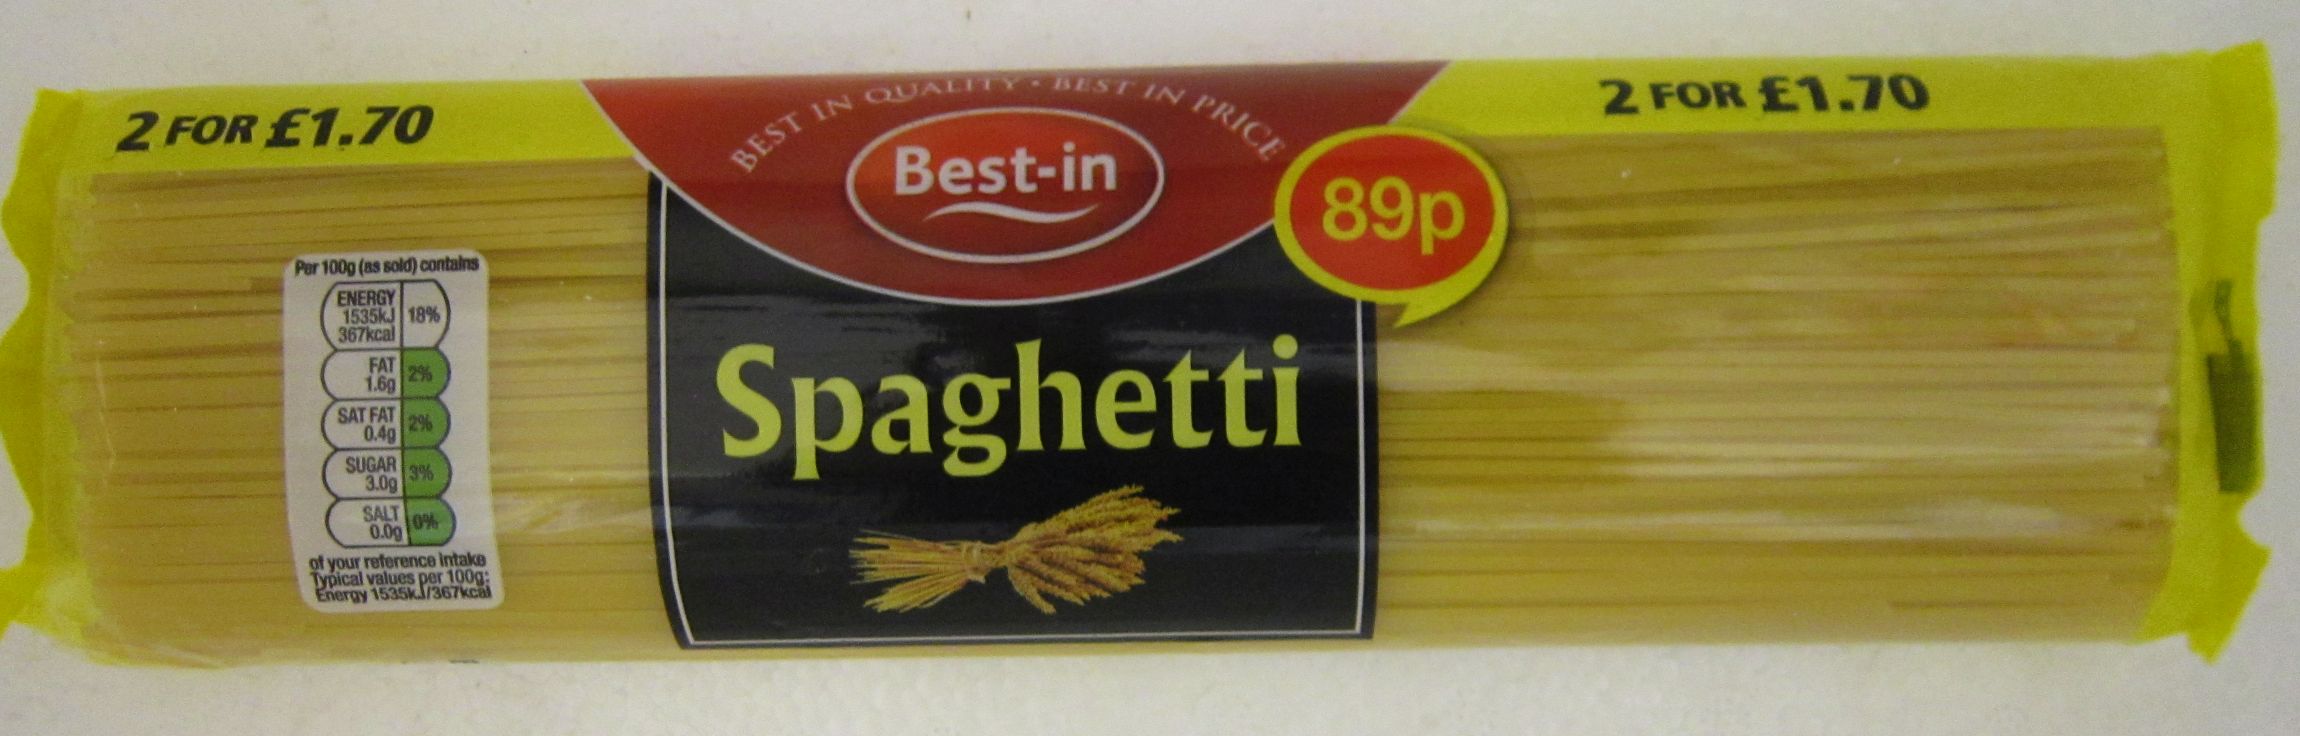 Best-in Spaghetti Image